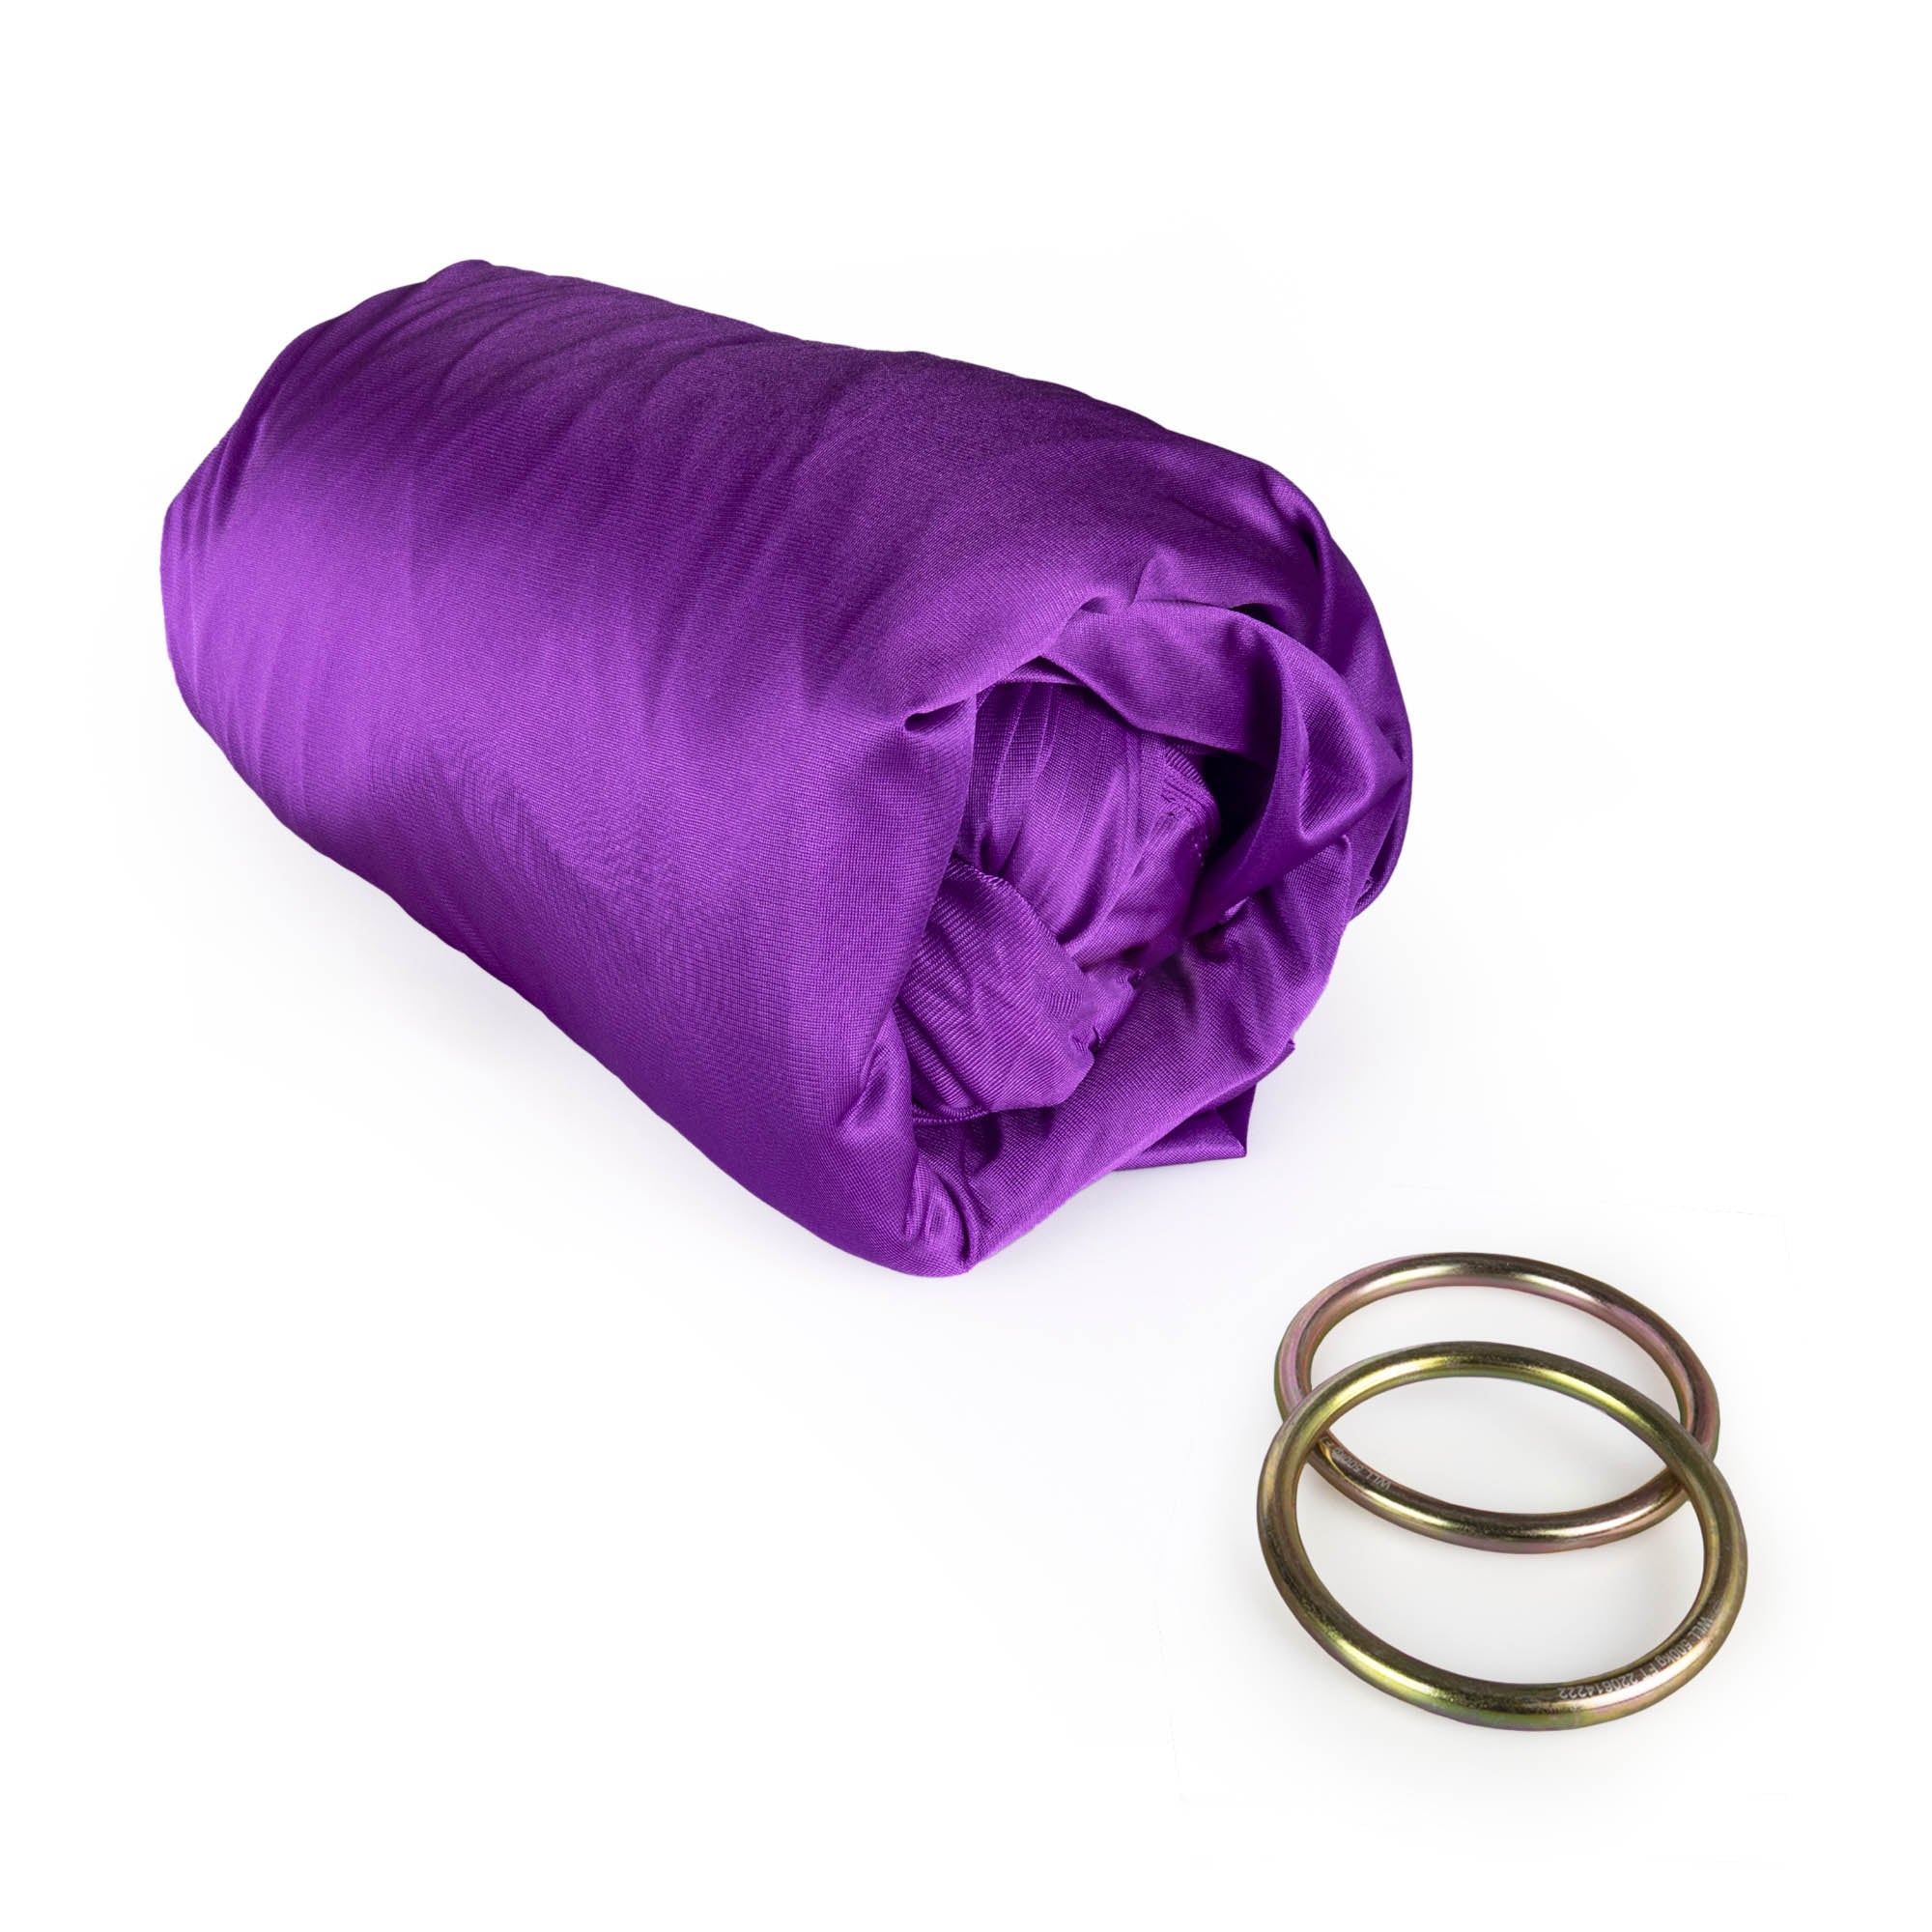 Purple yoga hammock with O rings detached